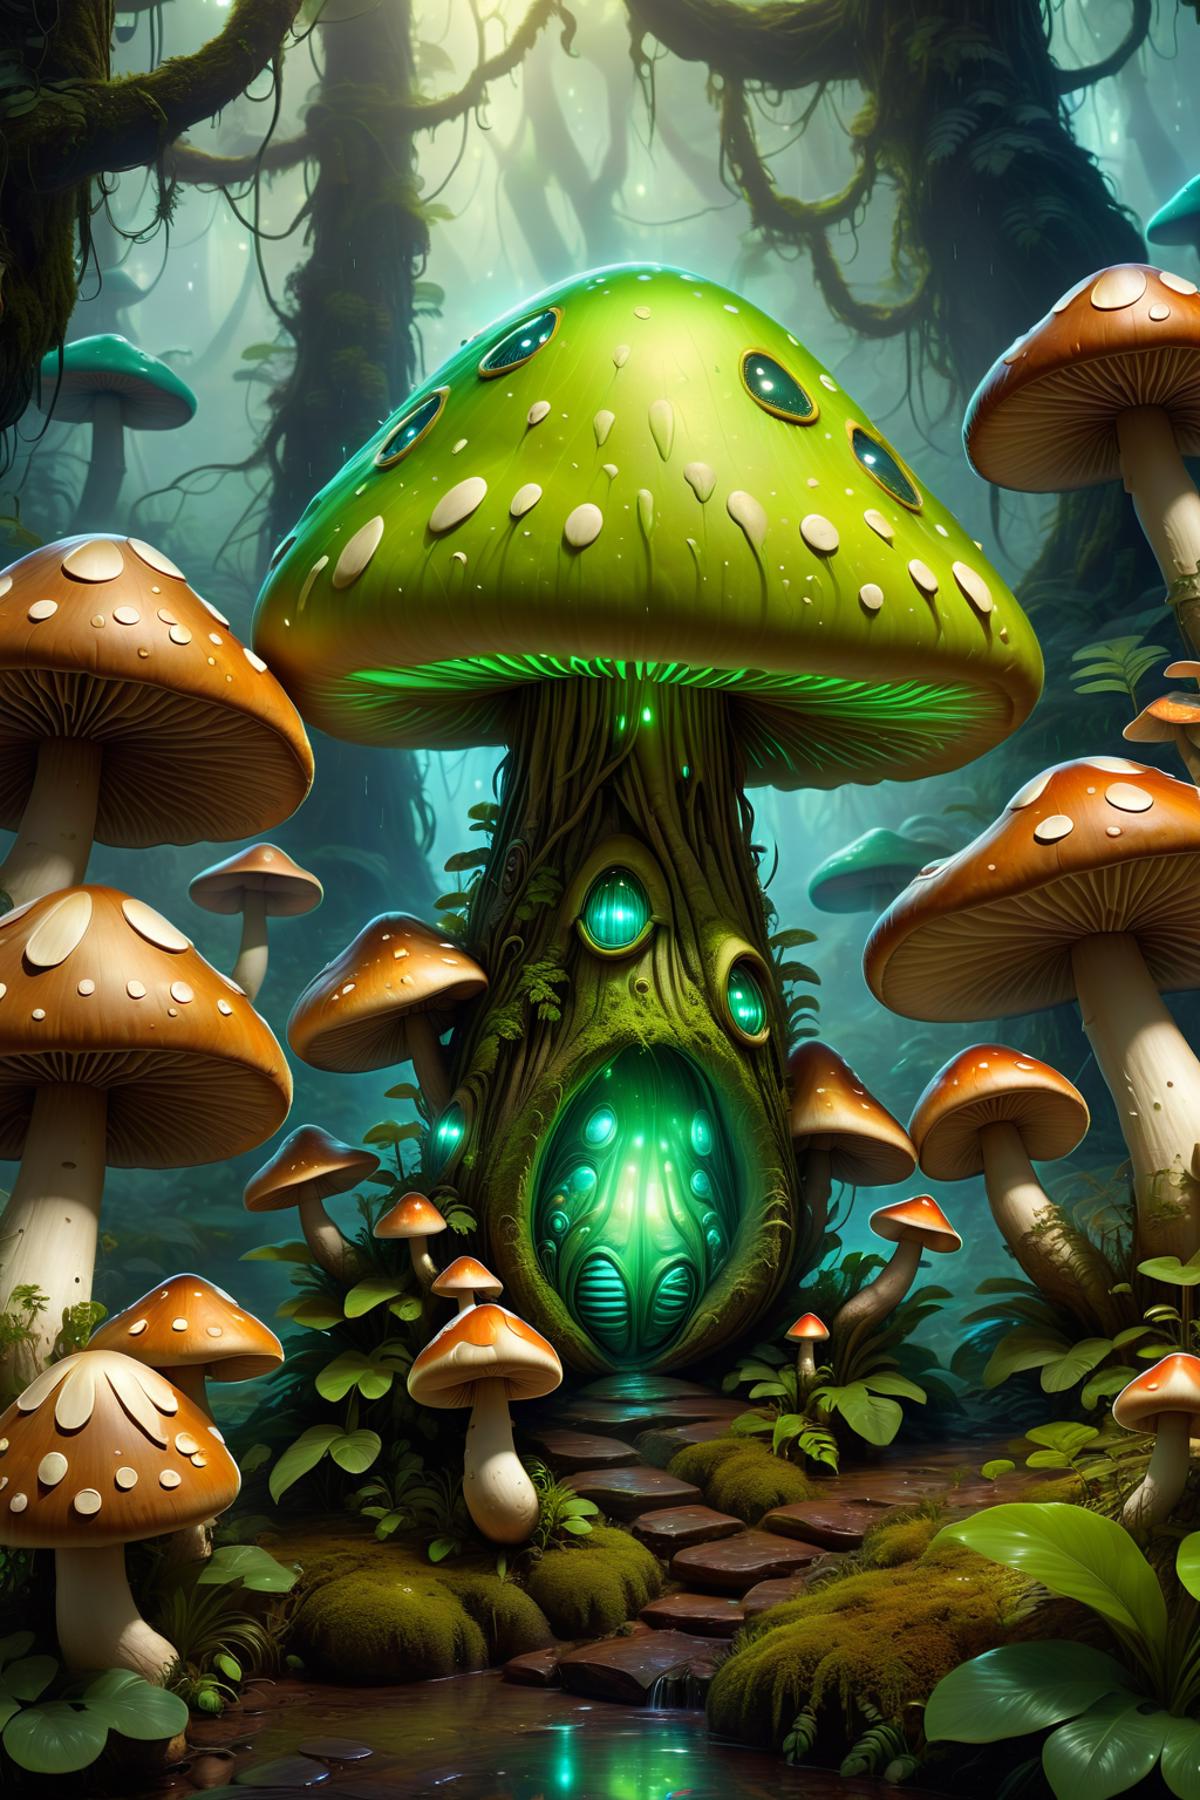 A Fantasy Art Mushroom Scene with Green Mushrooms and a Tree